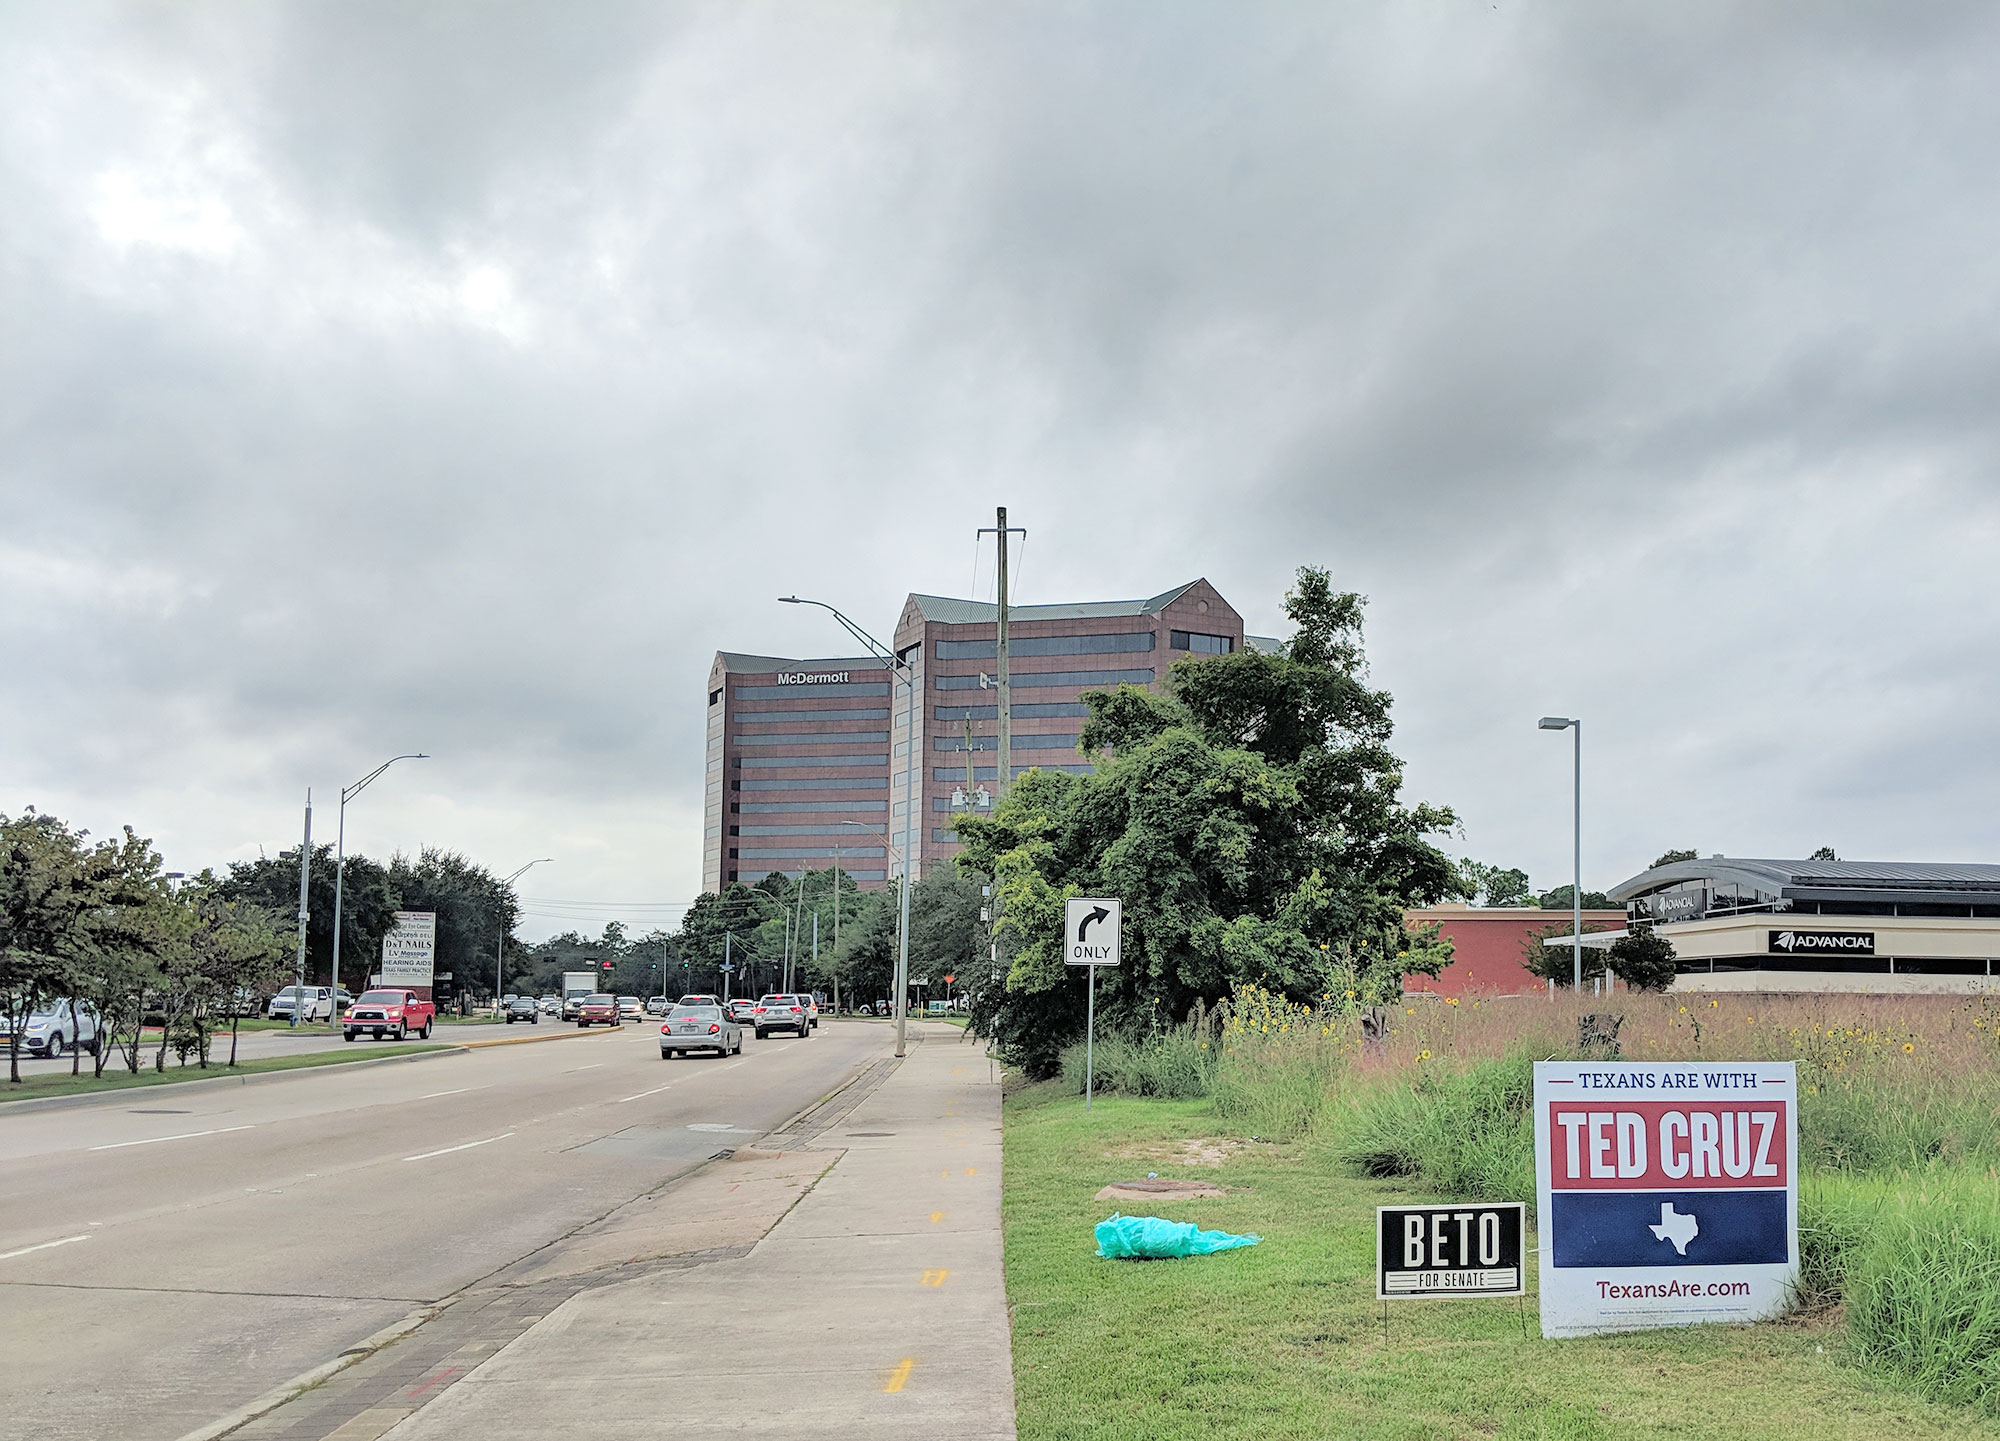 The Memorial District of Houston Texas.